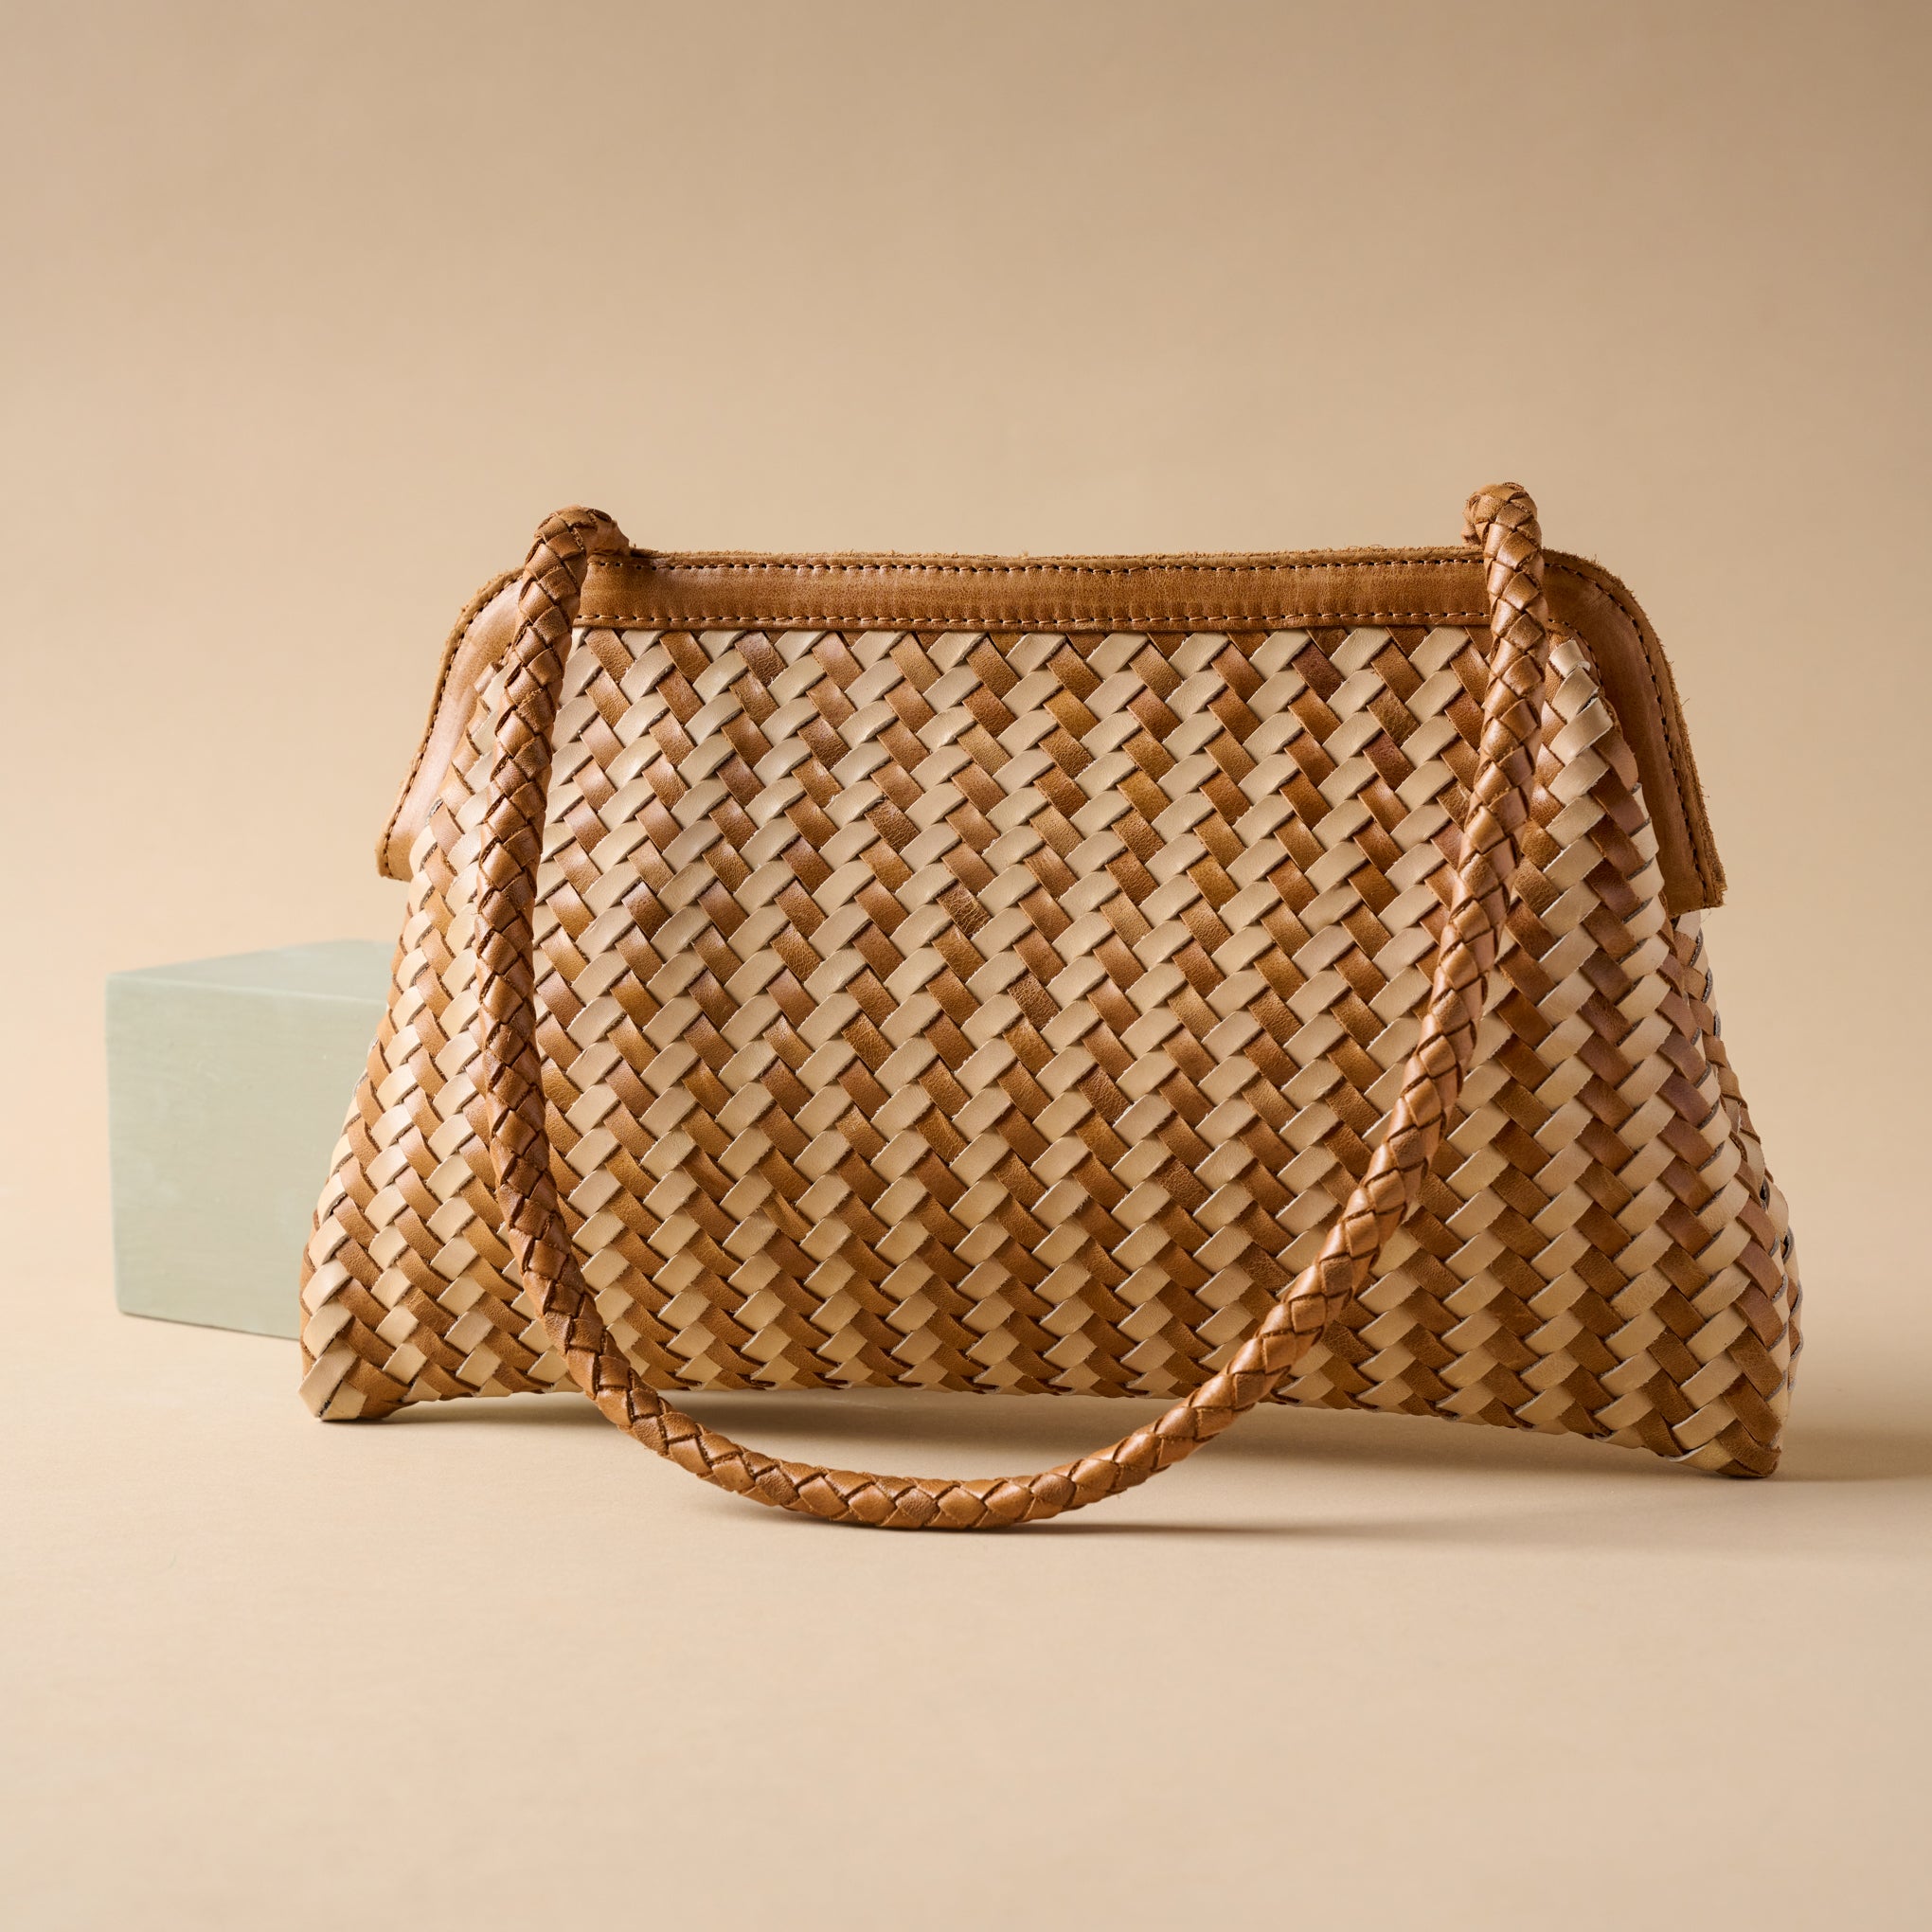 Coco stripe shoulder bag with herringbone pattern.  $200.00